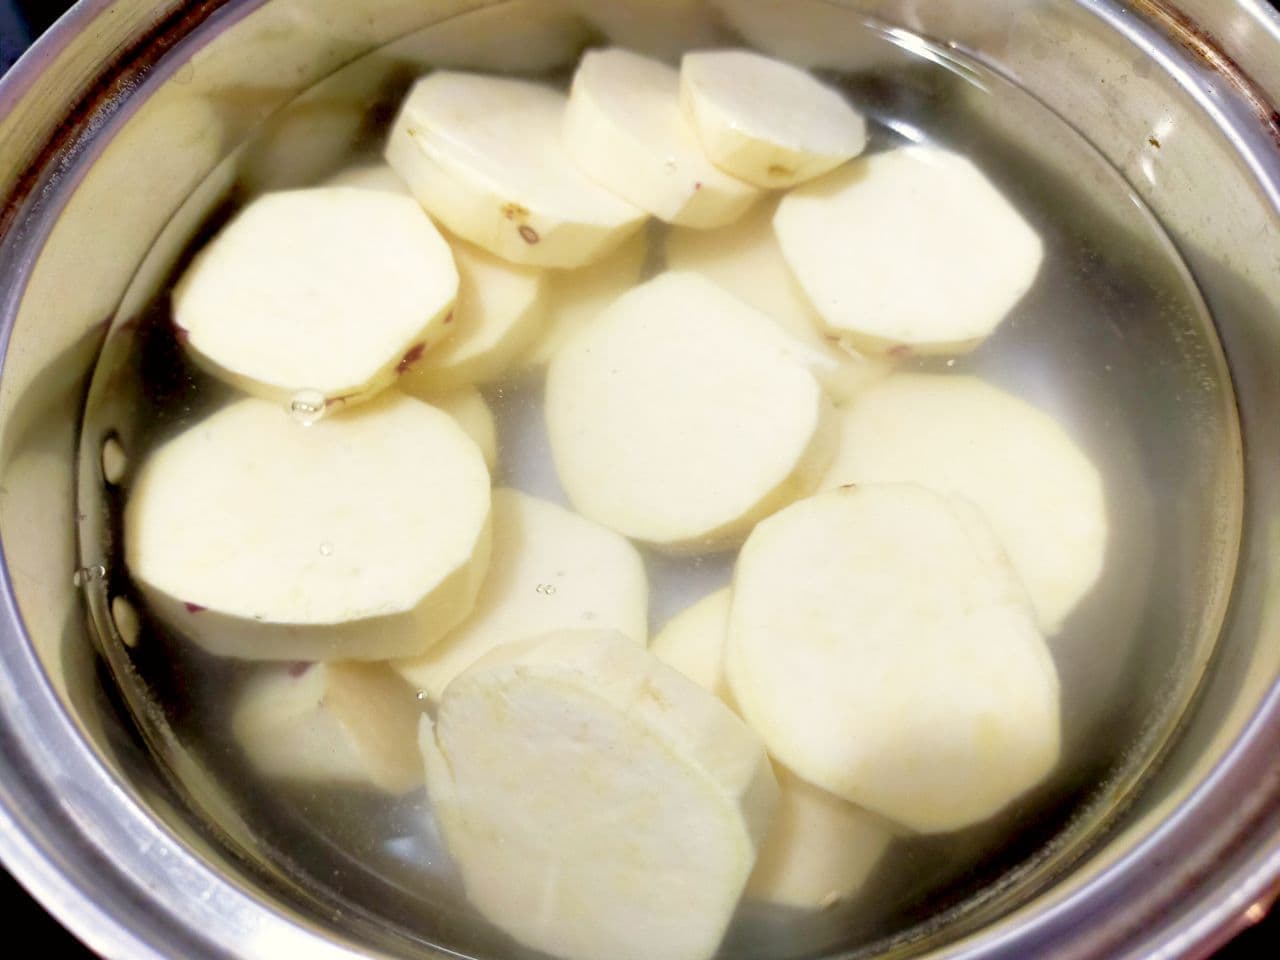 "Sweet potato shiruko" recipe